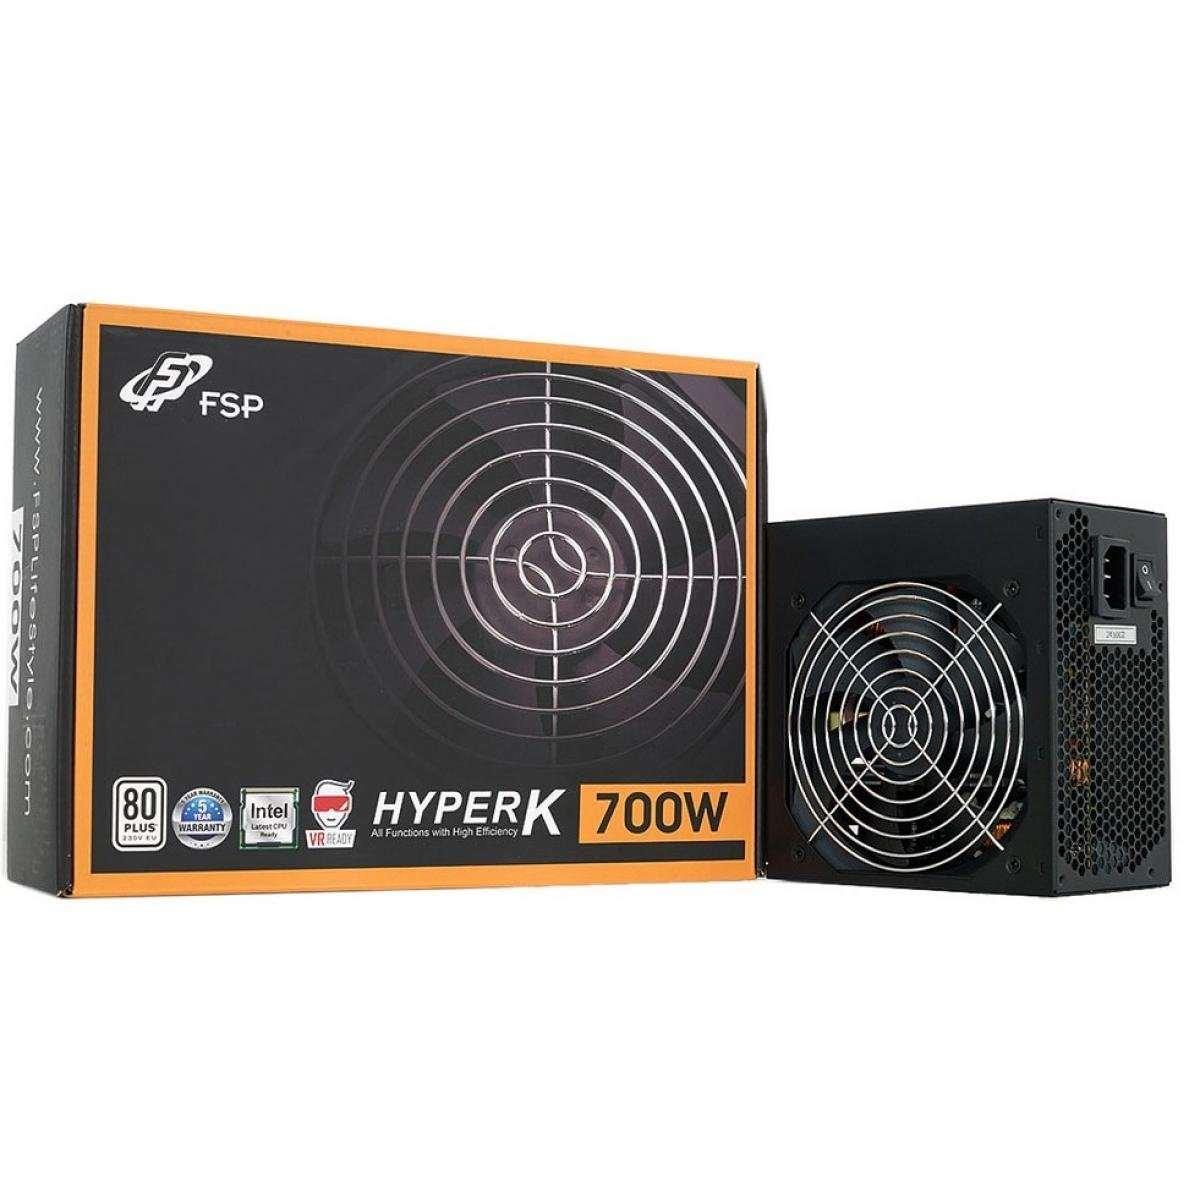 FSP POWER SUPPLY FSP HYPER K Series HYPER K 700W 80+ high quality 85% Efficiency ATX Power Supply,120mm Quiet Fan Black & Black Ribbon Cables